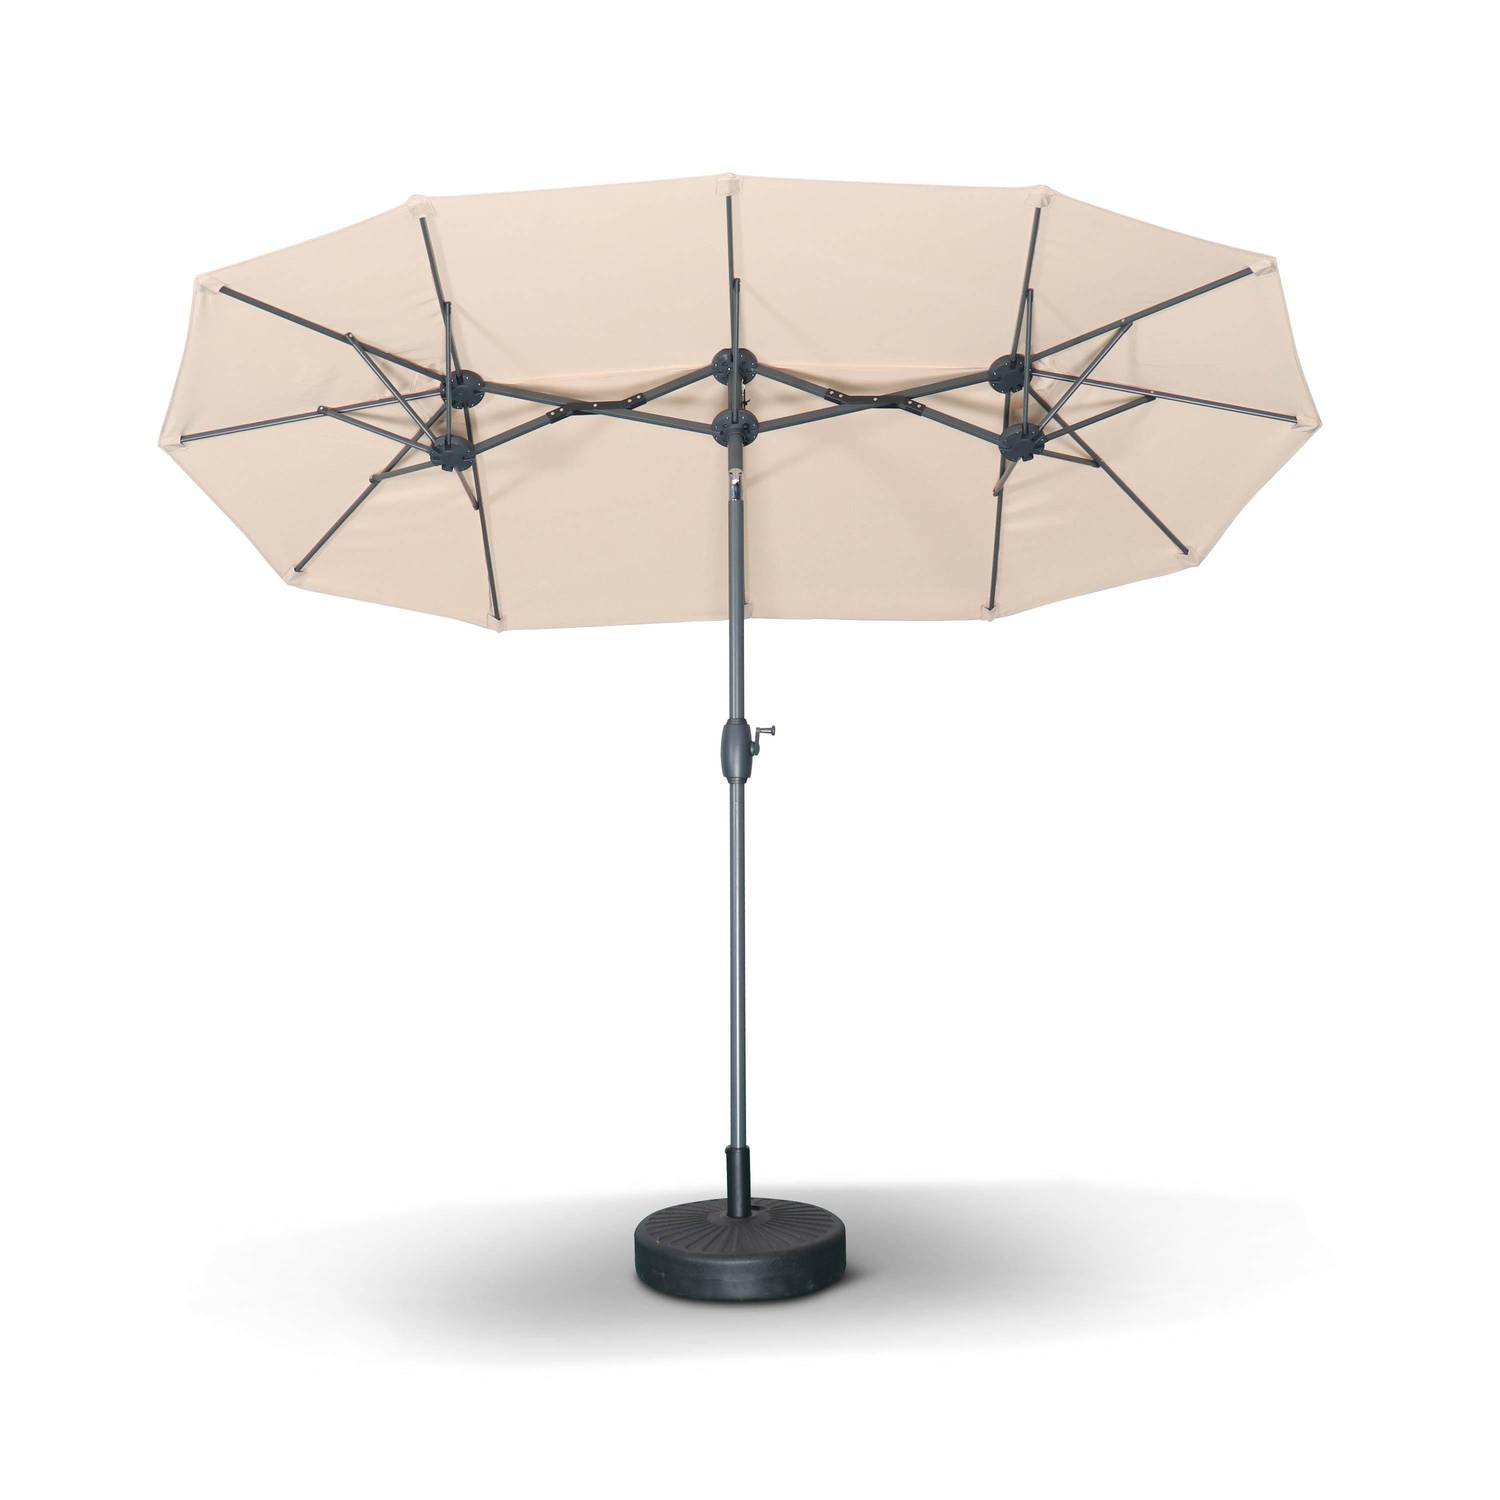 Ovalen stokparasol, dubbel, 1x3m – Beige – Grote parasol met centrale stok, draaibaar en zwengel Photo3